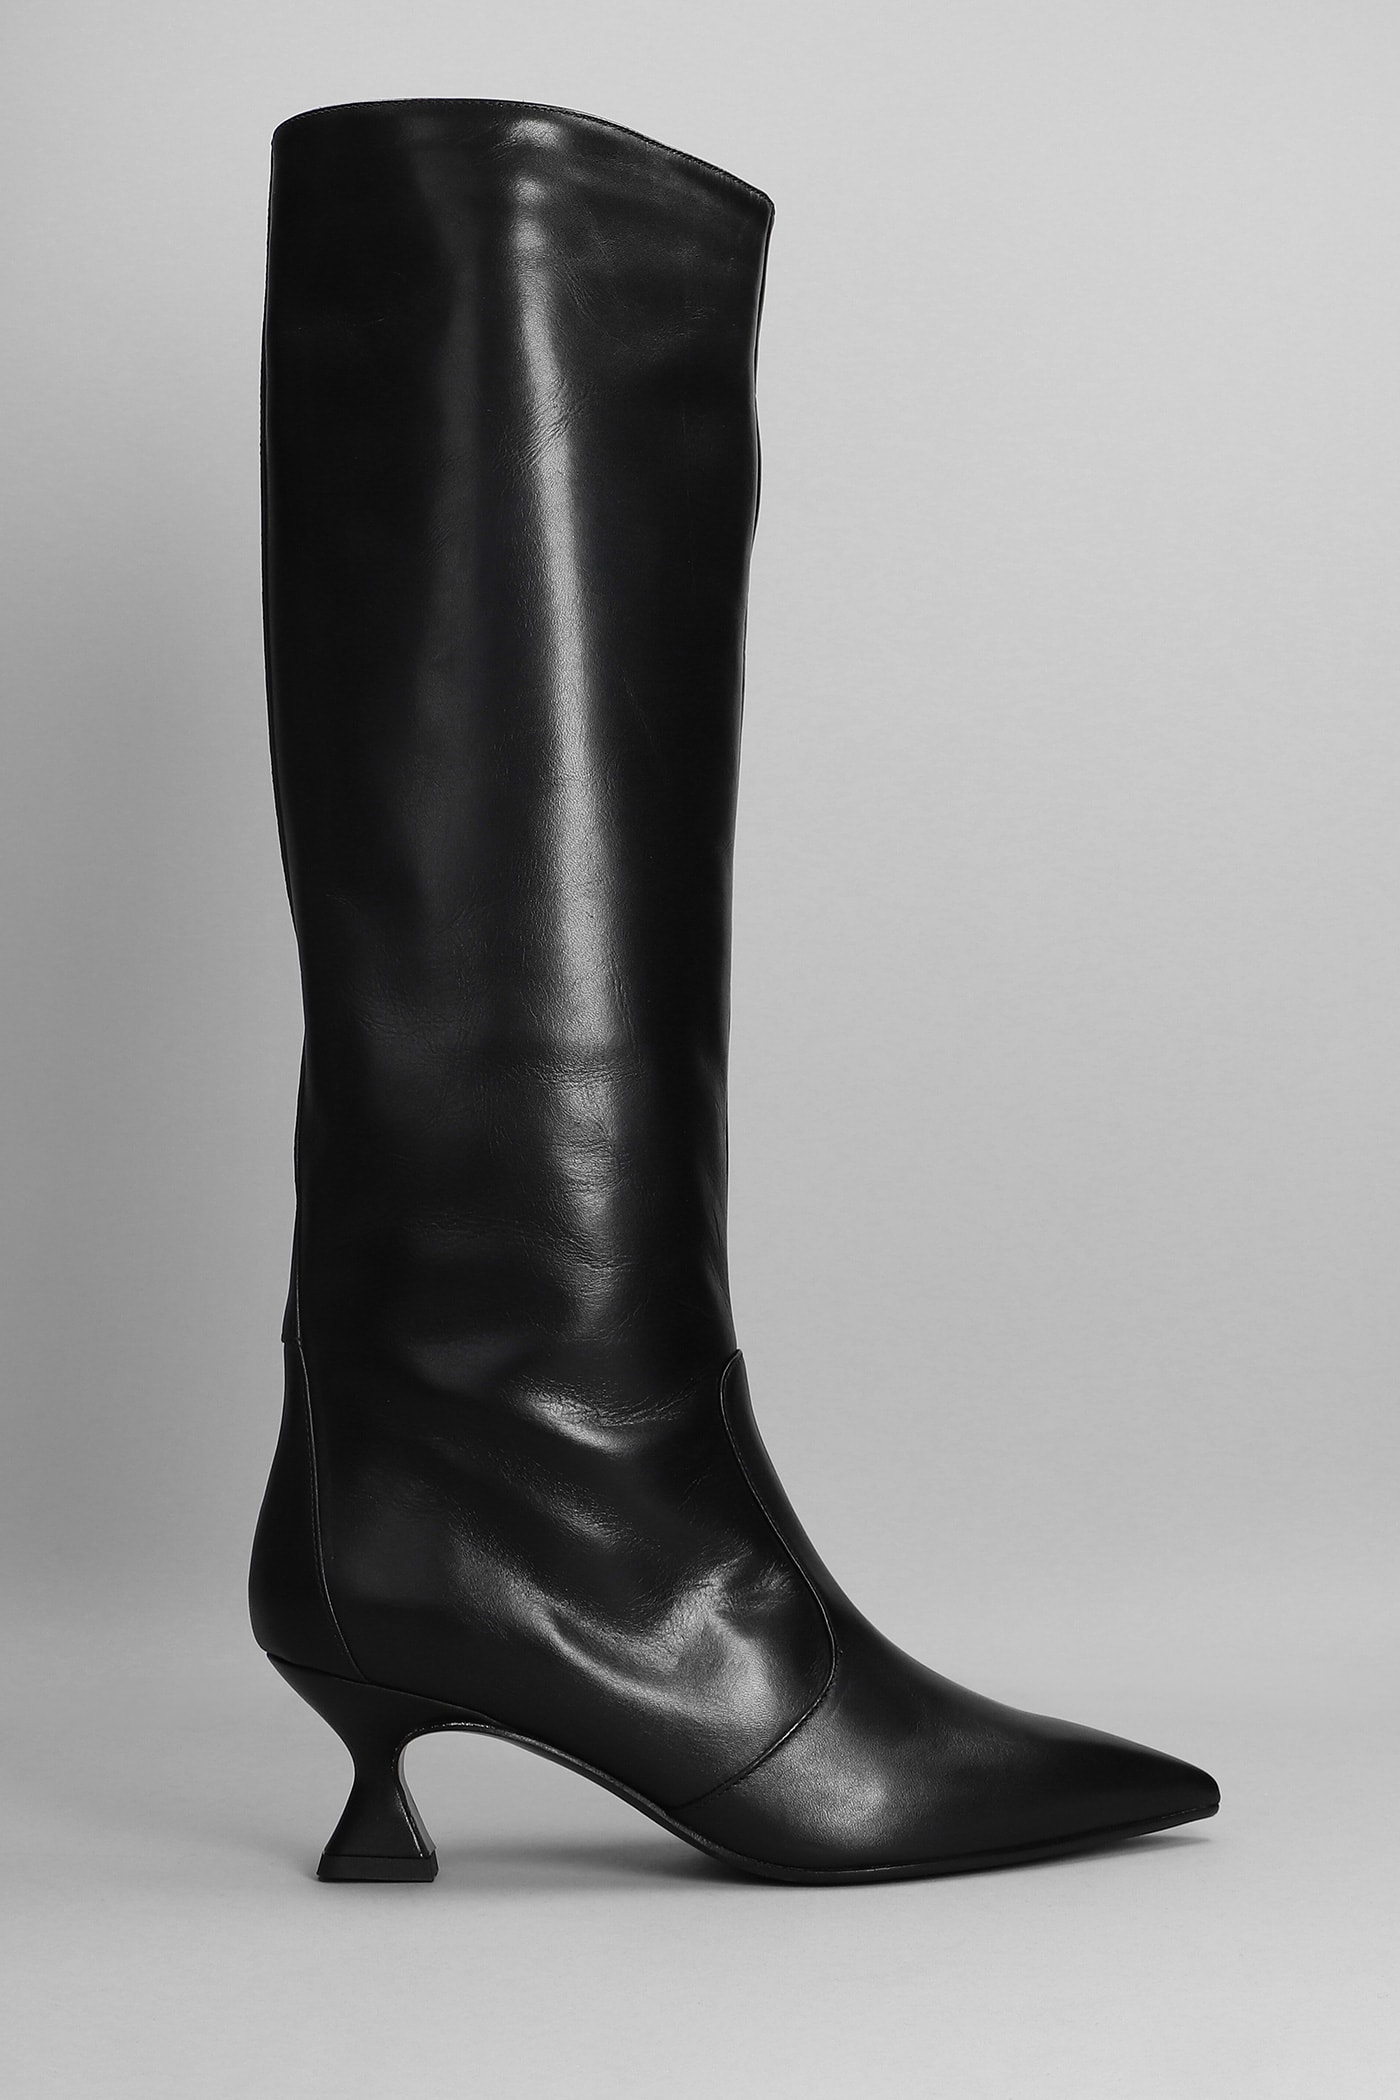 Fabio Rusconi High Heels Boots In Black Leather